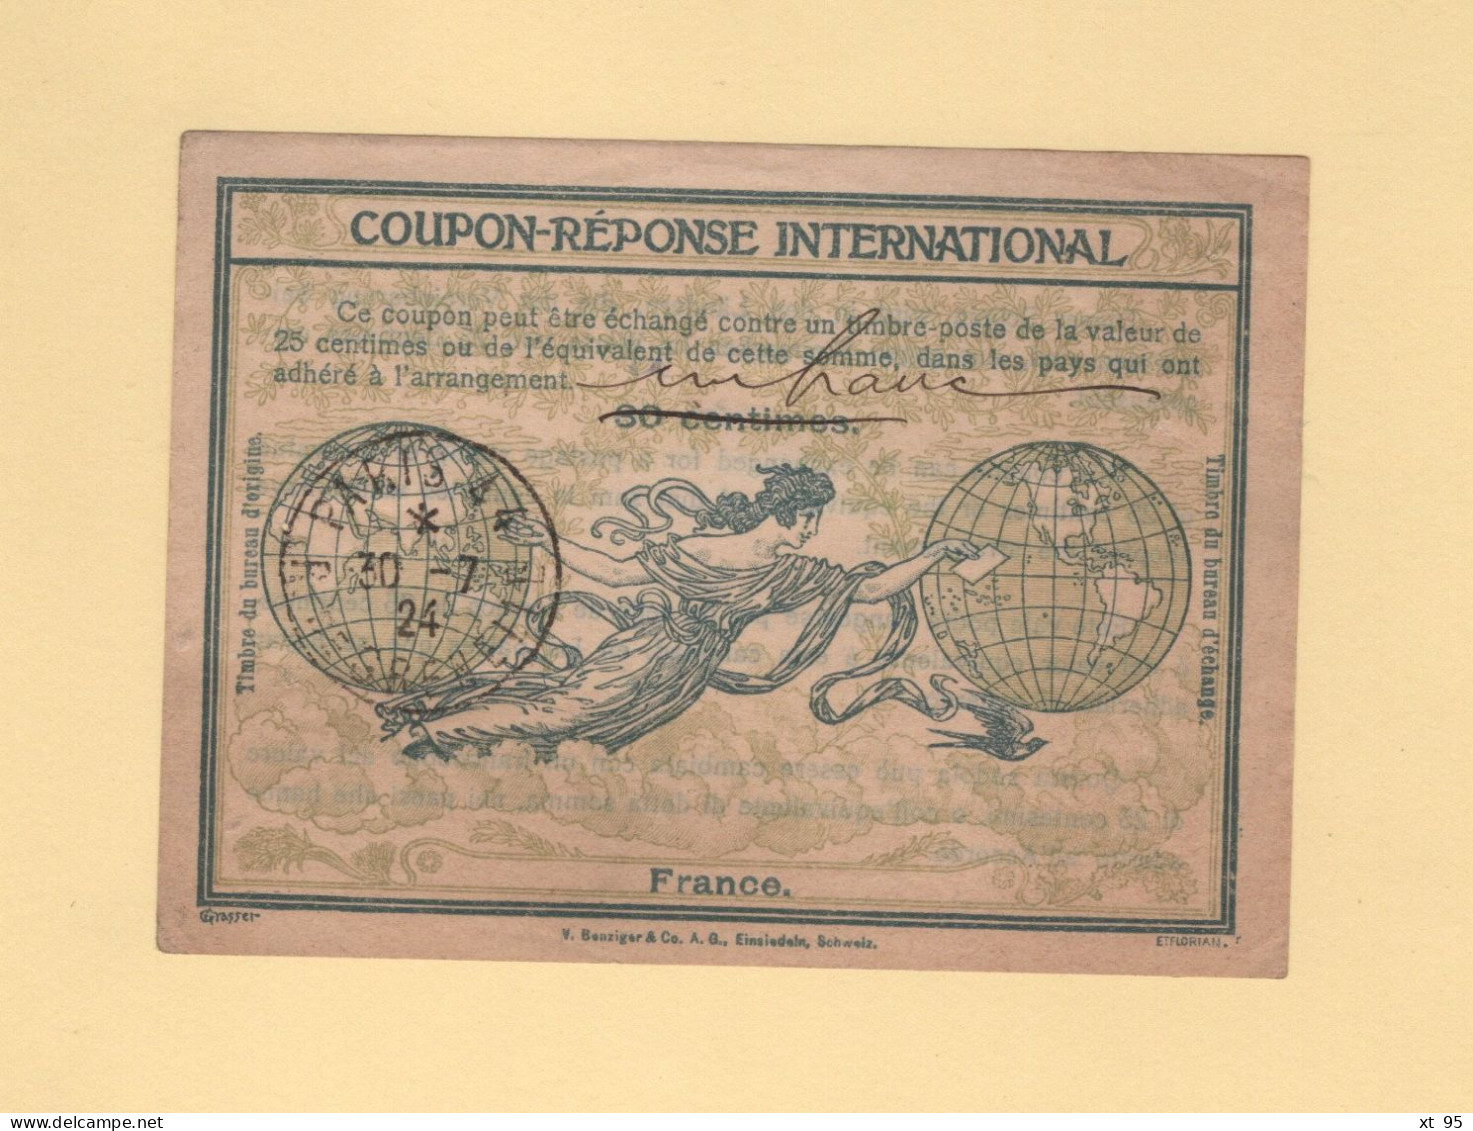 Coupon Reponse International - Surcharge Un Franc Manuscrite - Paris - 1924 - Cupón-respuesta